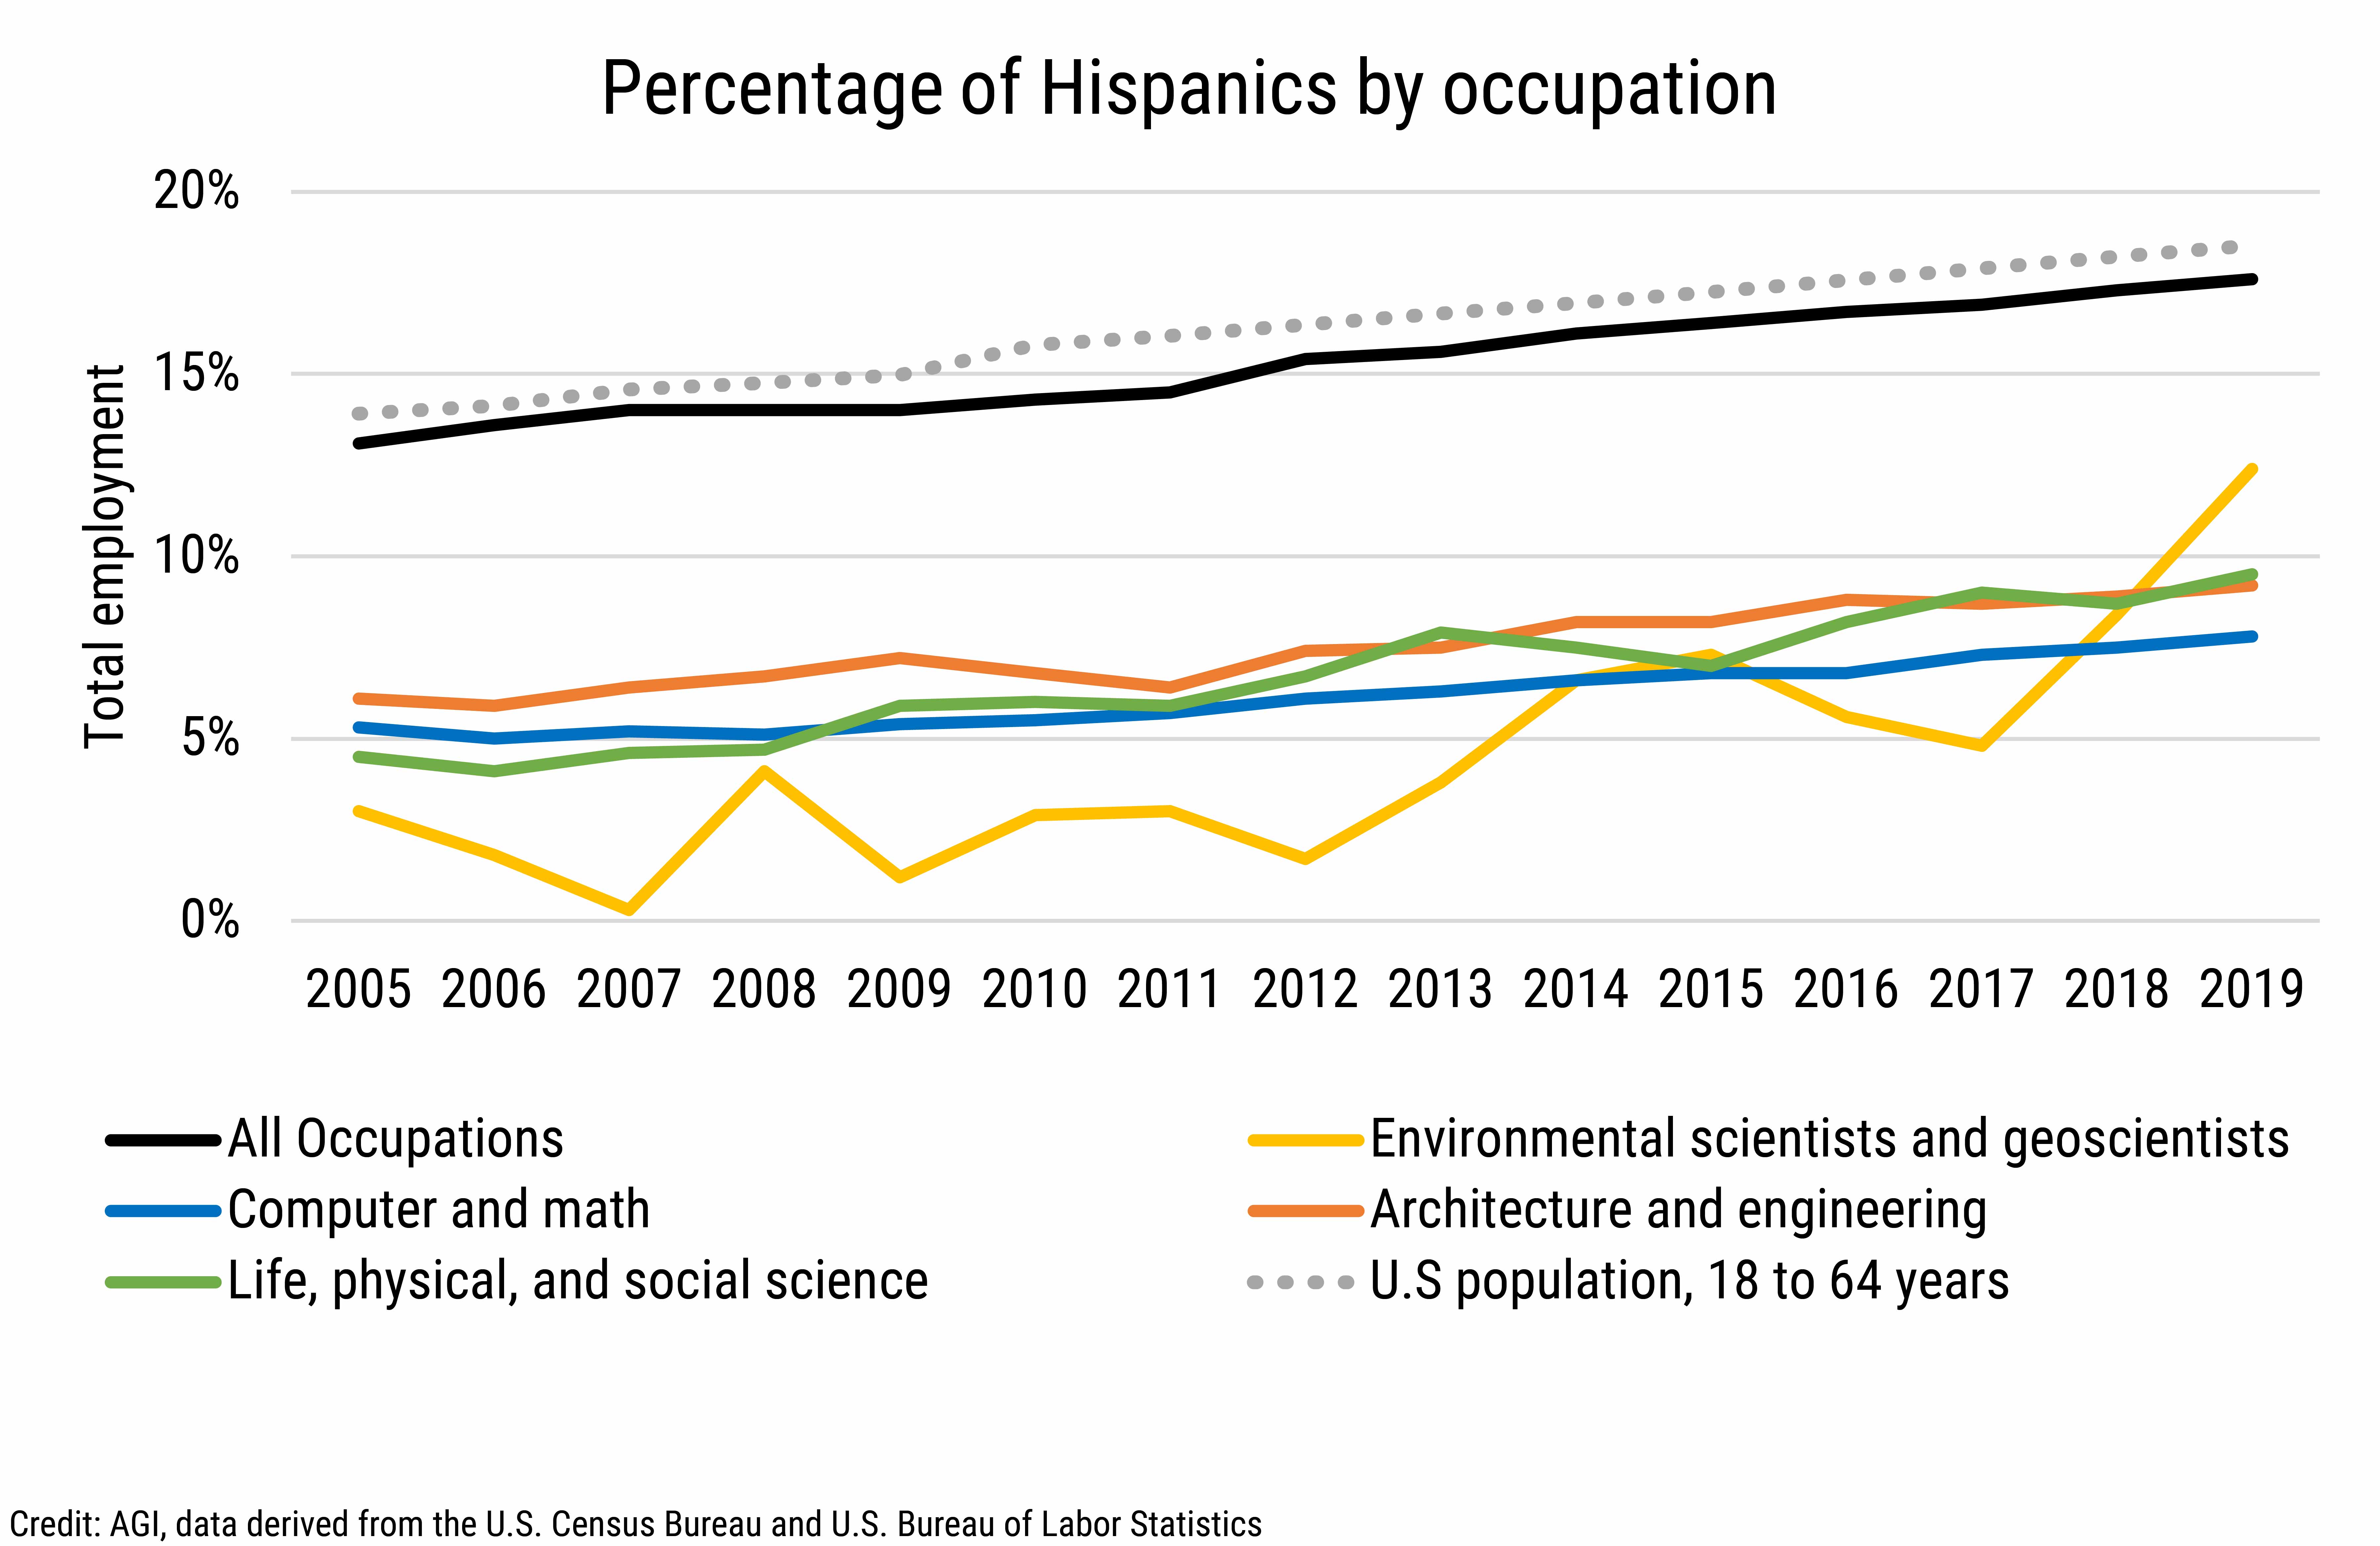 DB2020-023 chart05-Percentage of Hispanics by occupation (Credit: AGI, data derived from the U.S. Census Bureau and U.S. Bureau of Labor Statistics)